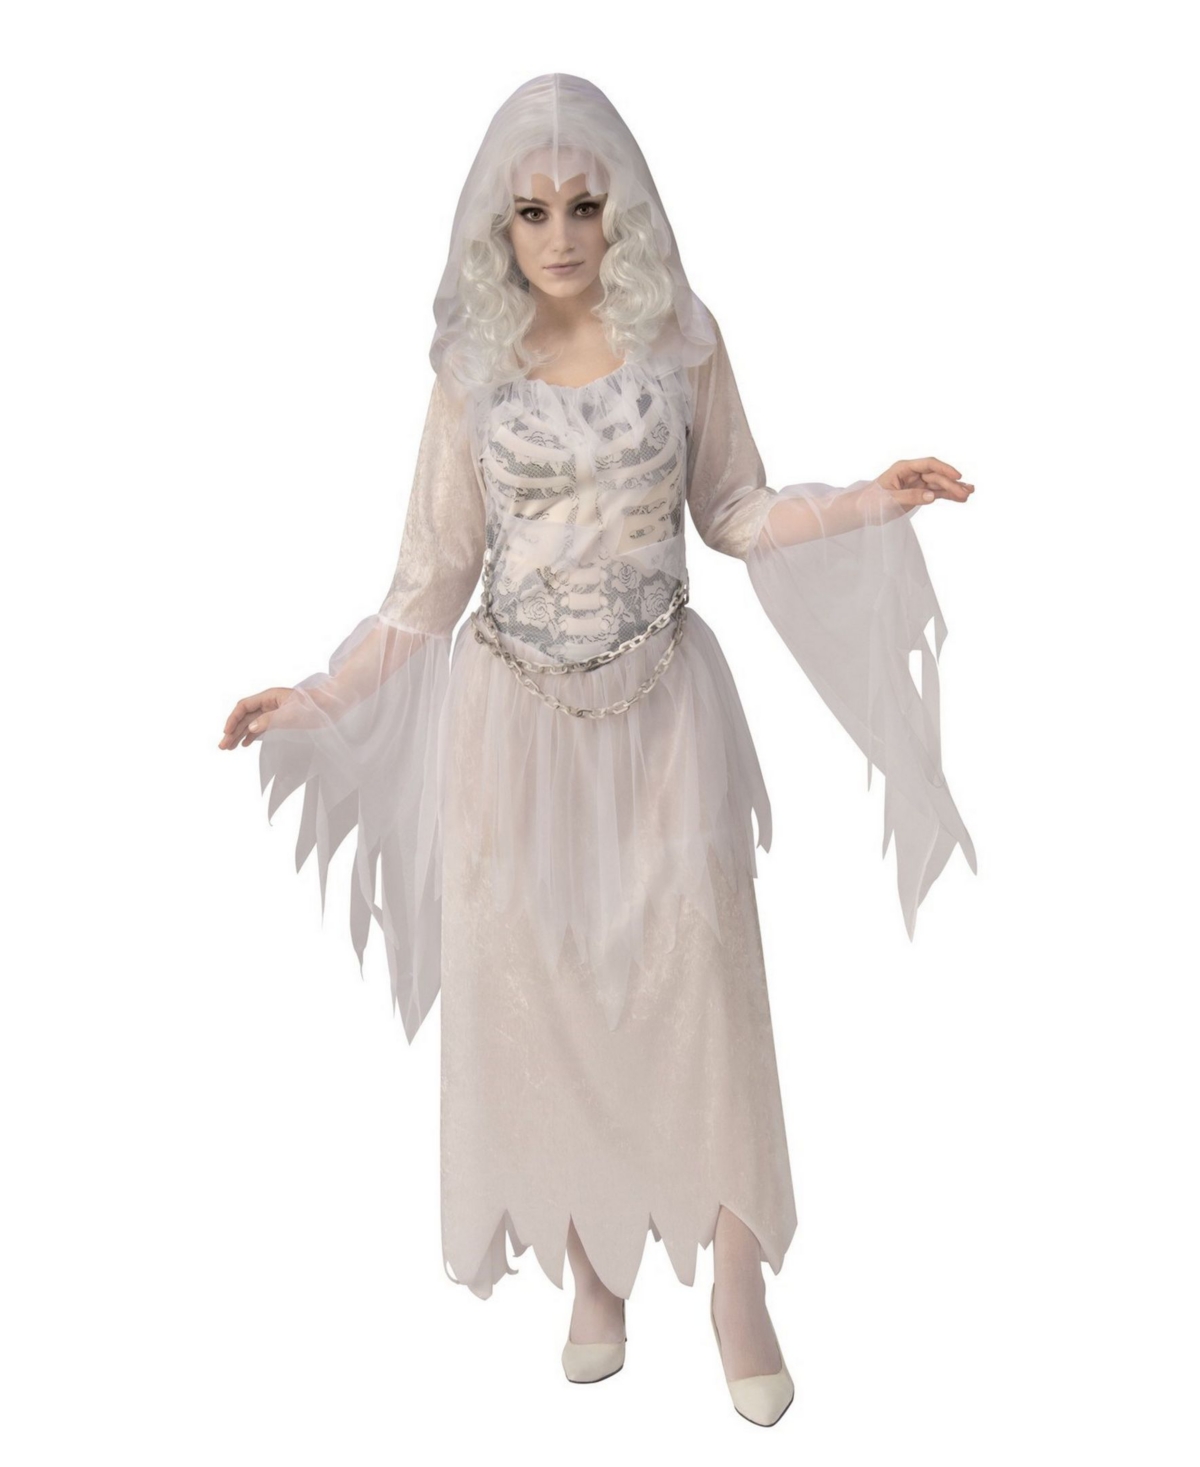 BuySeasons Women's Ghostly Woman Adult Costume